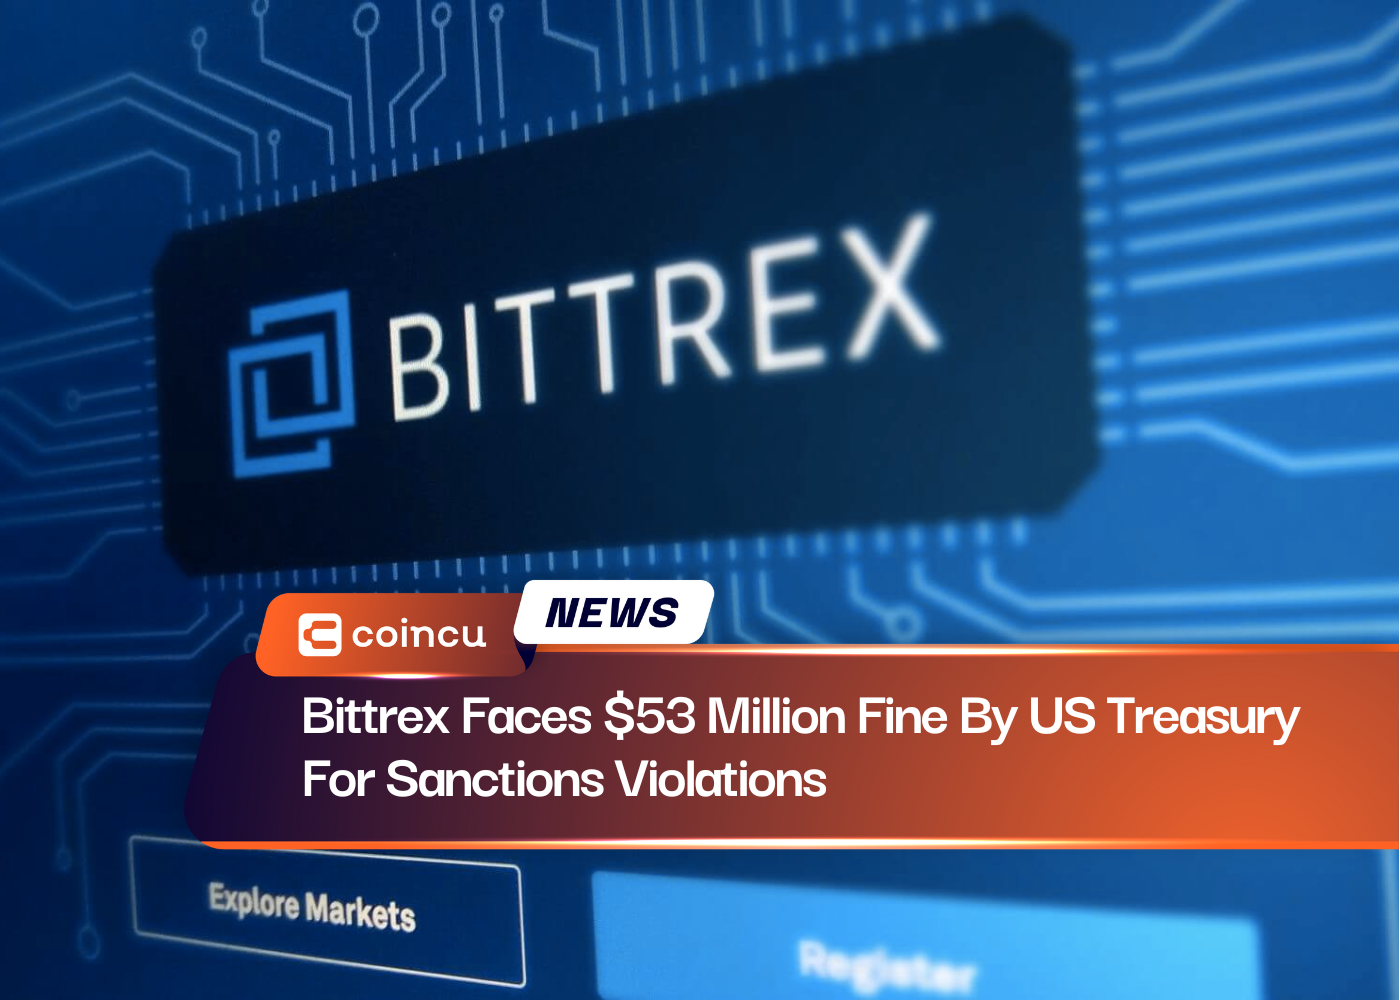 Bittrex 因违反制裁行为而面临美国财政部 53 万美元的罚款